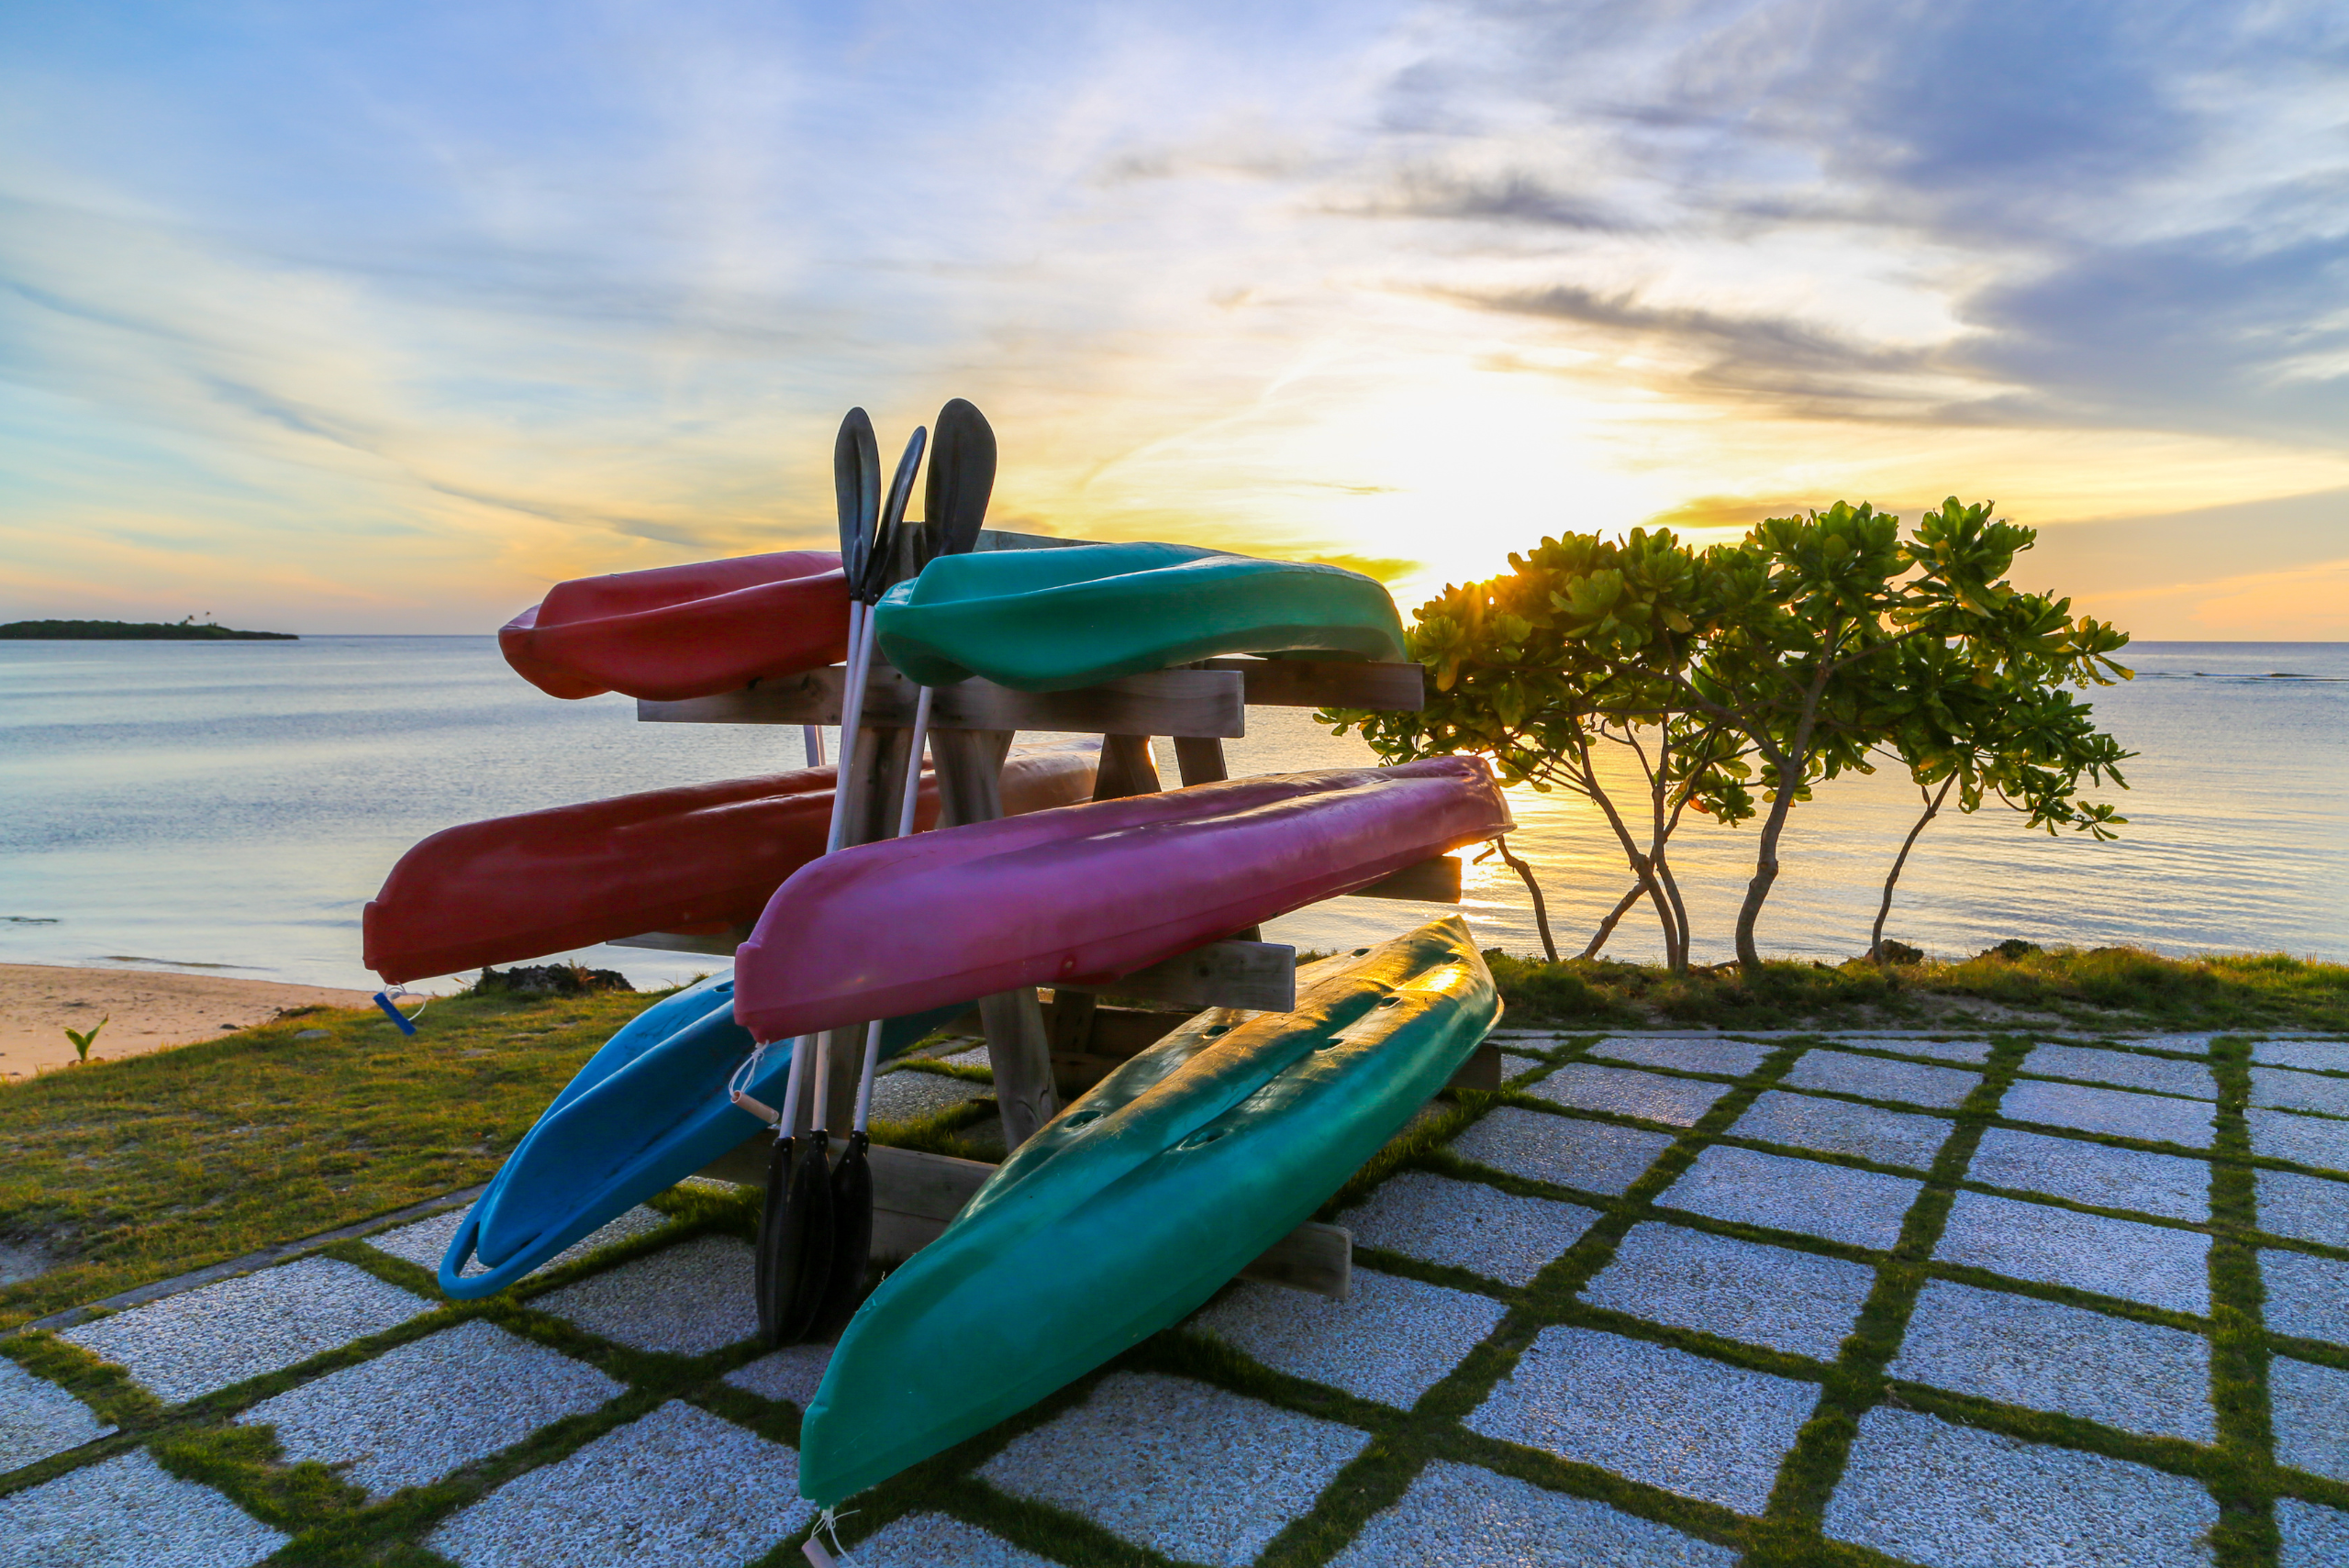 A DIY kayak rack on concrete platform with grass growing between the slaps.